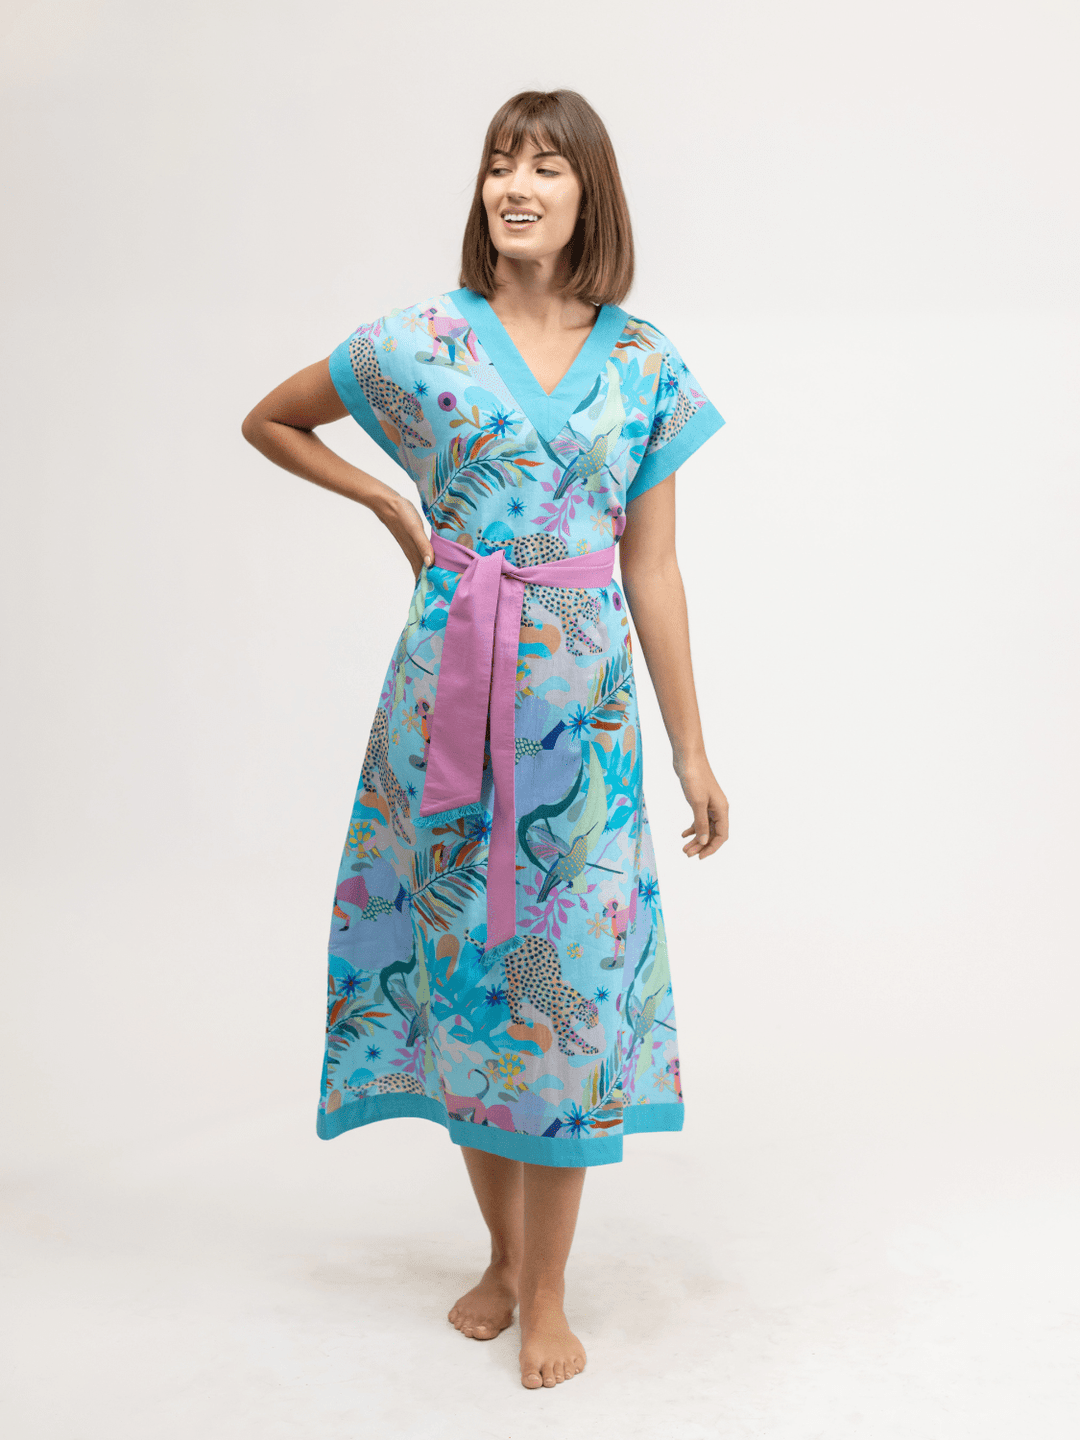 Beau & Ro Dress The Kelly Dress | Alice Colin Safari Blue